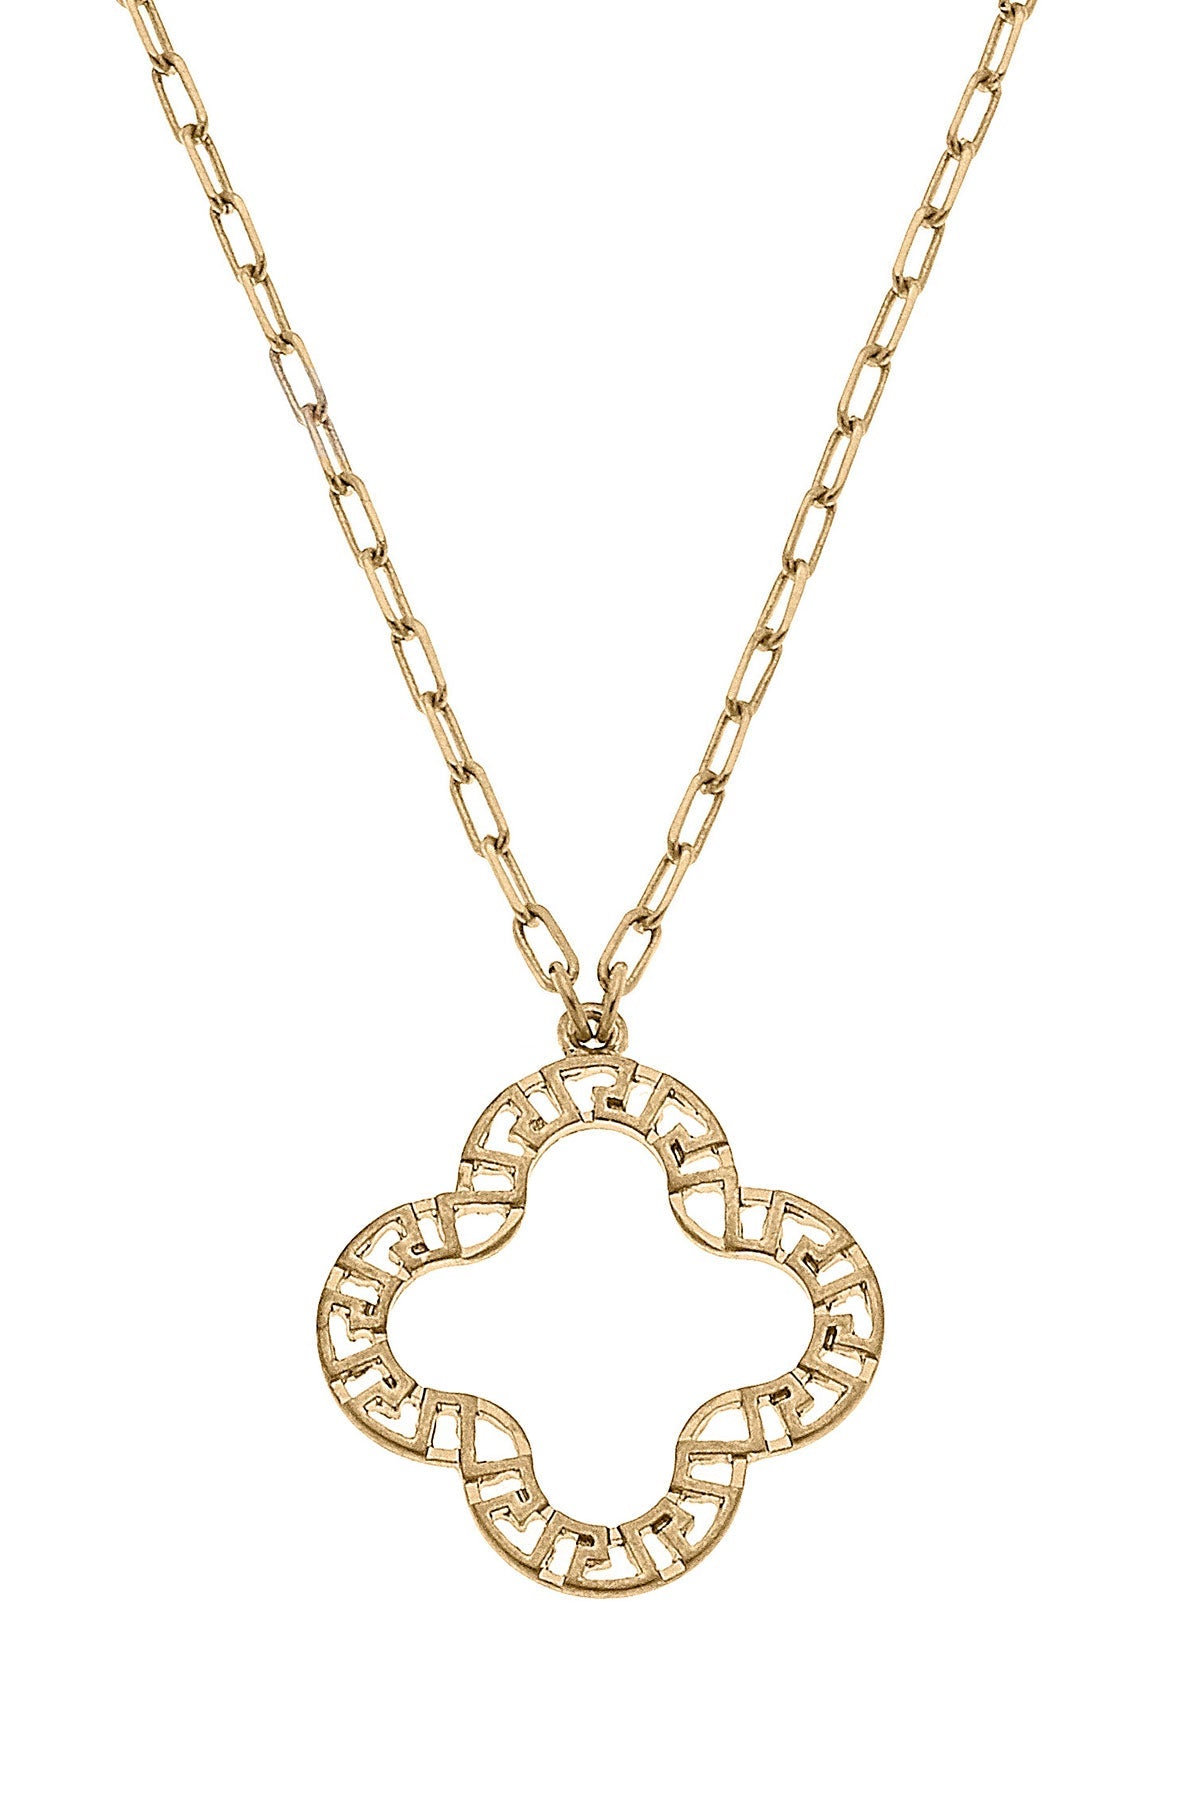 Kristin Greek Keys Clover Pendant Necklace in Worn Gold